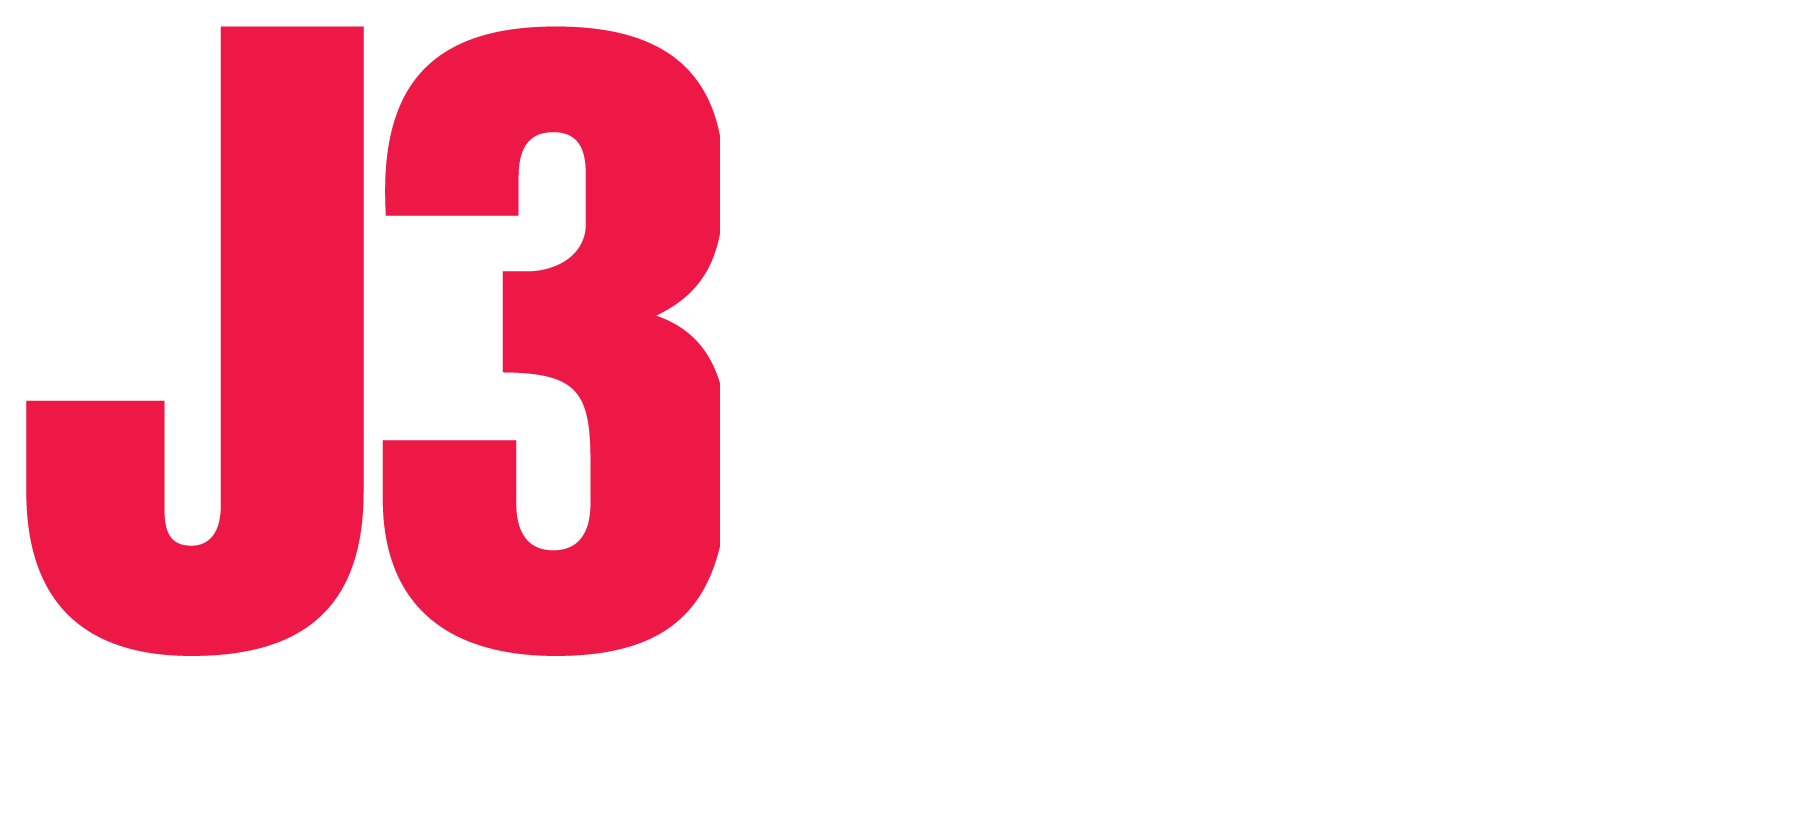 J3Red Marketing Logo